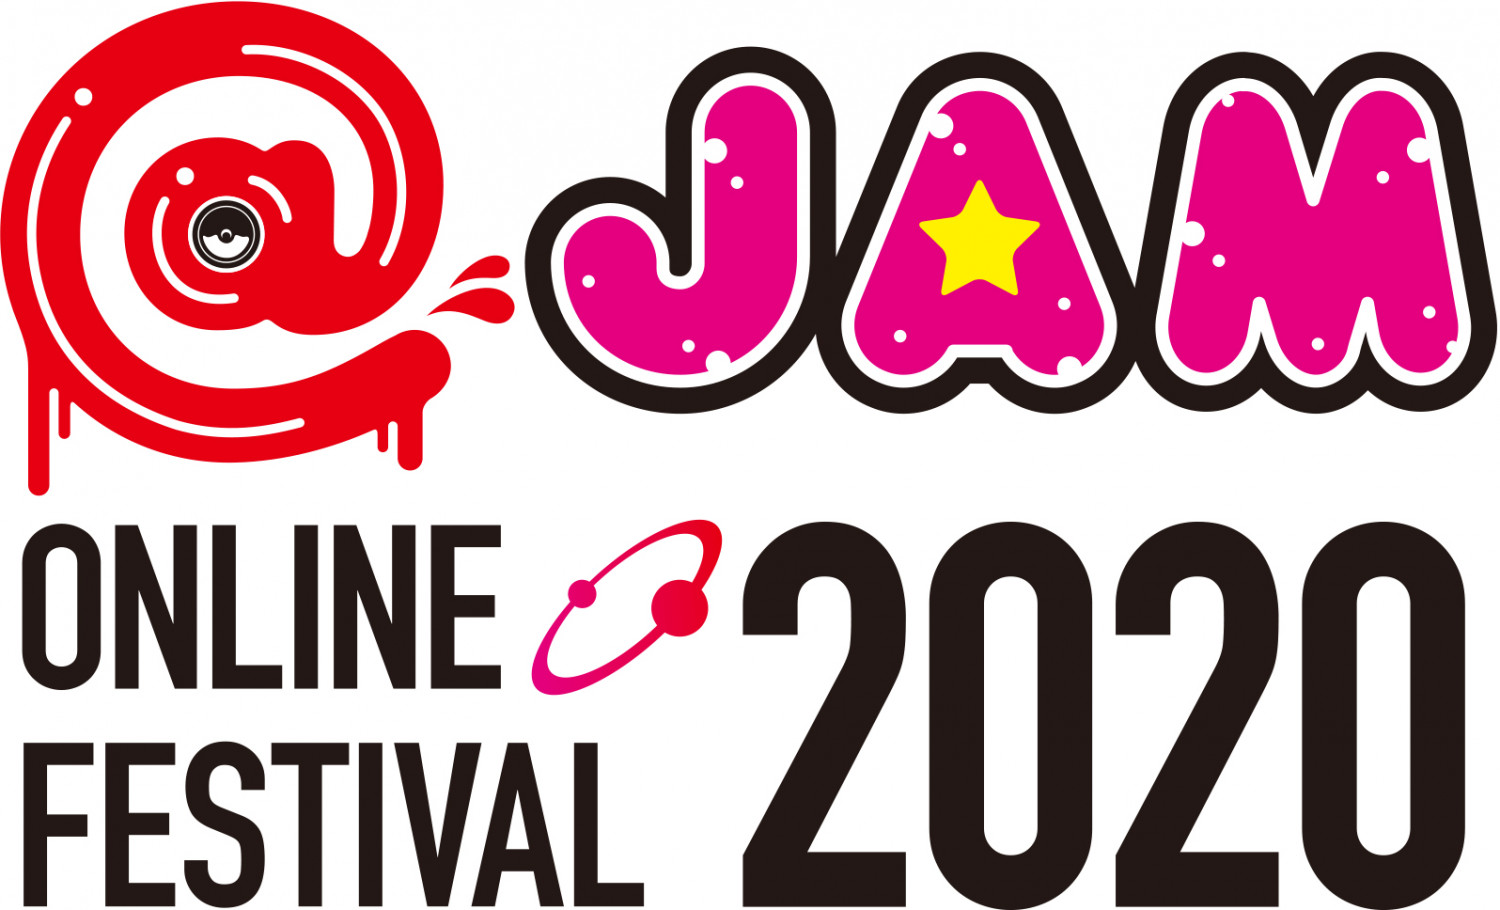 Live Streaming Circuit Festival “@ JAM ONLINE FESTIVAL 2020” will be held!!